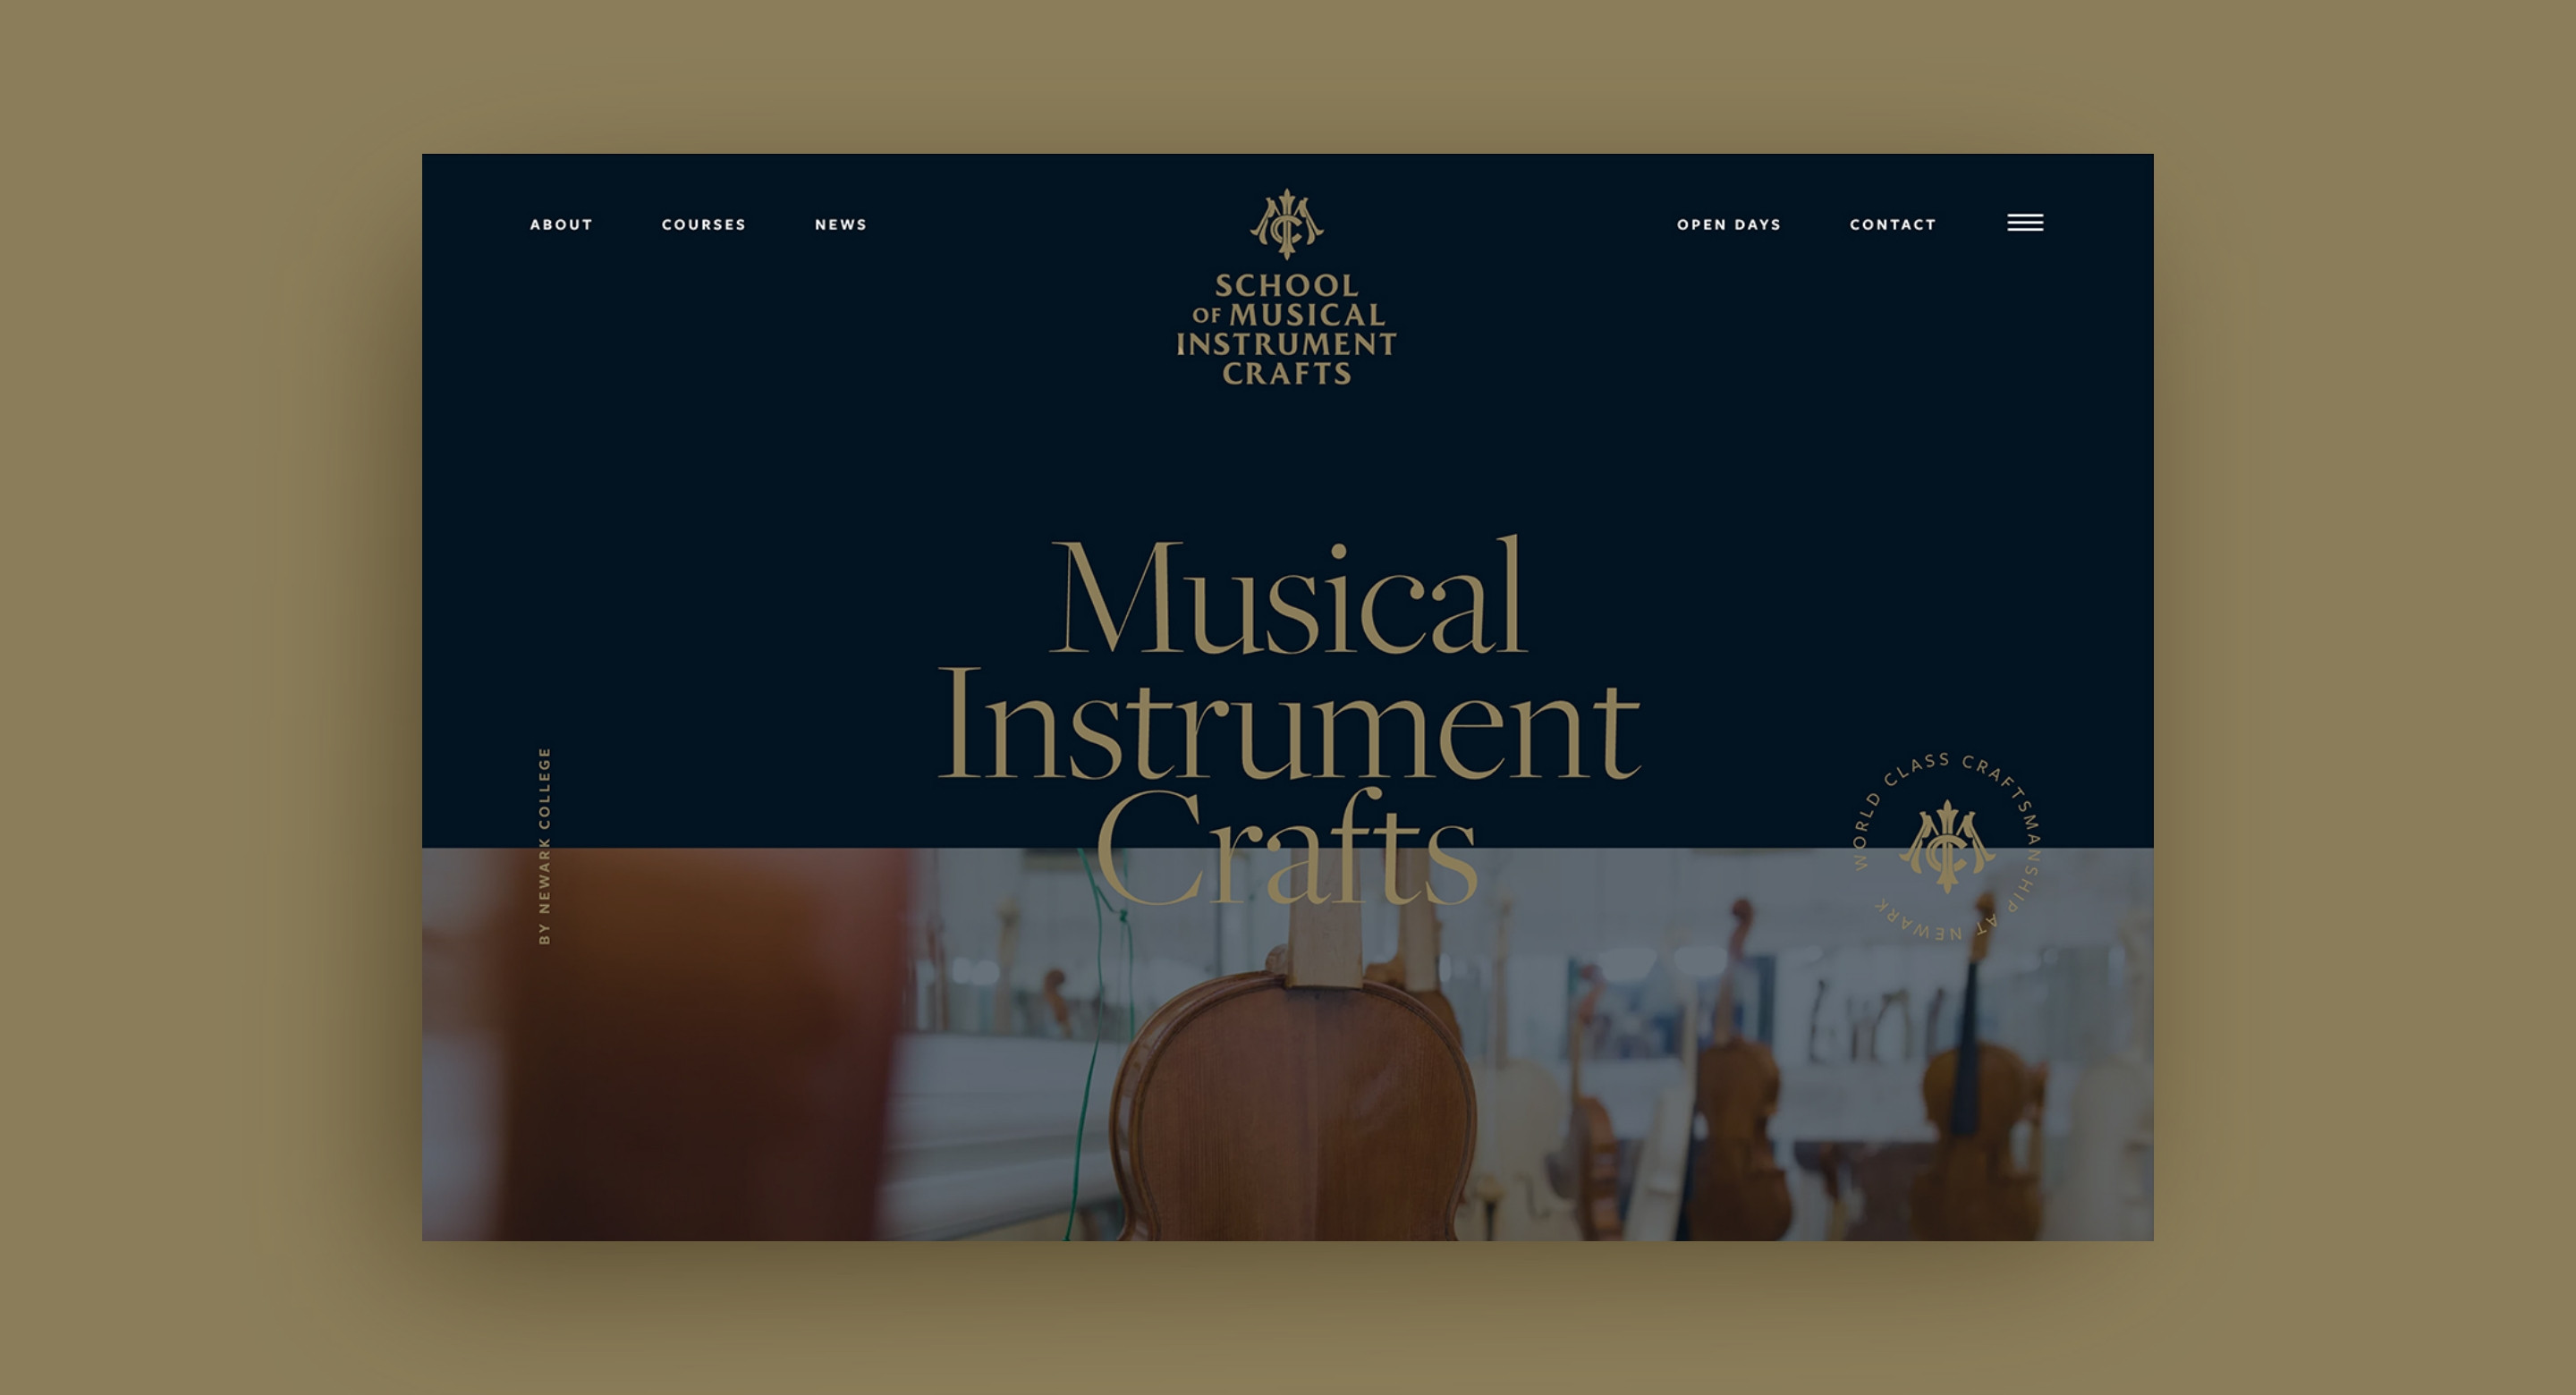 School of Musical Instrument Crafts logo and website design